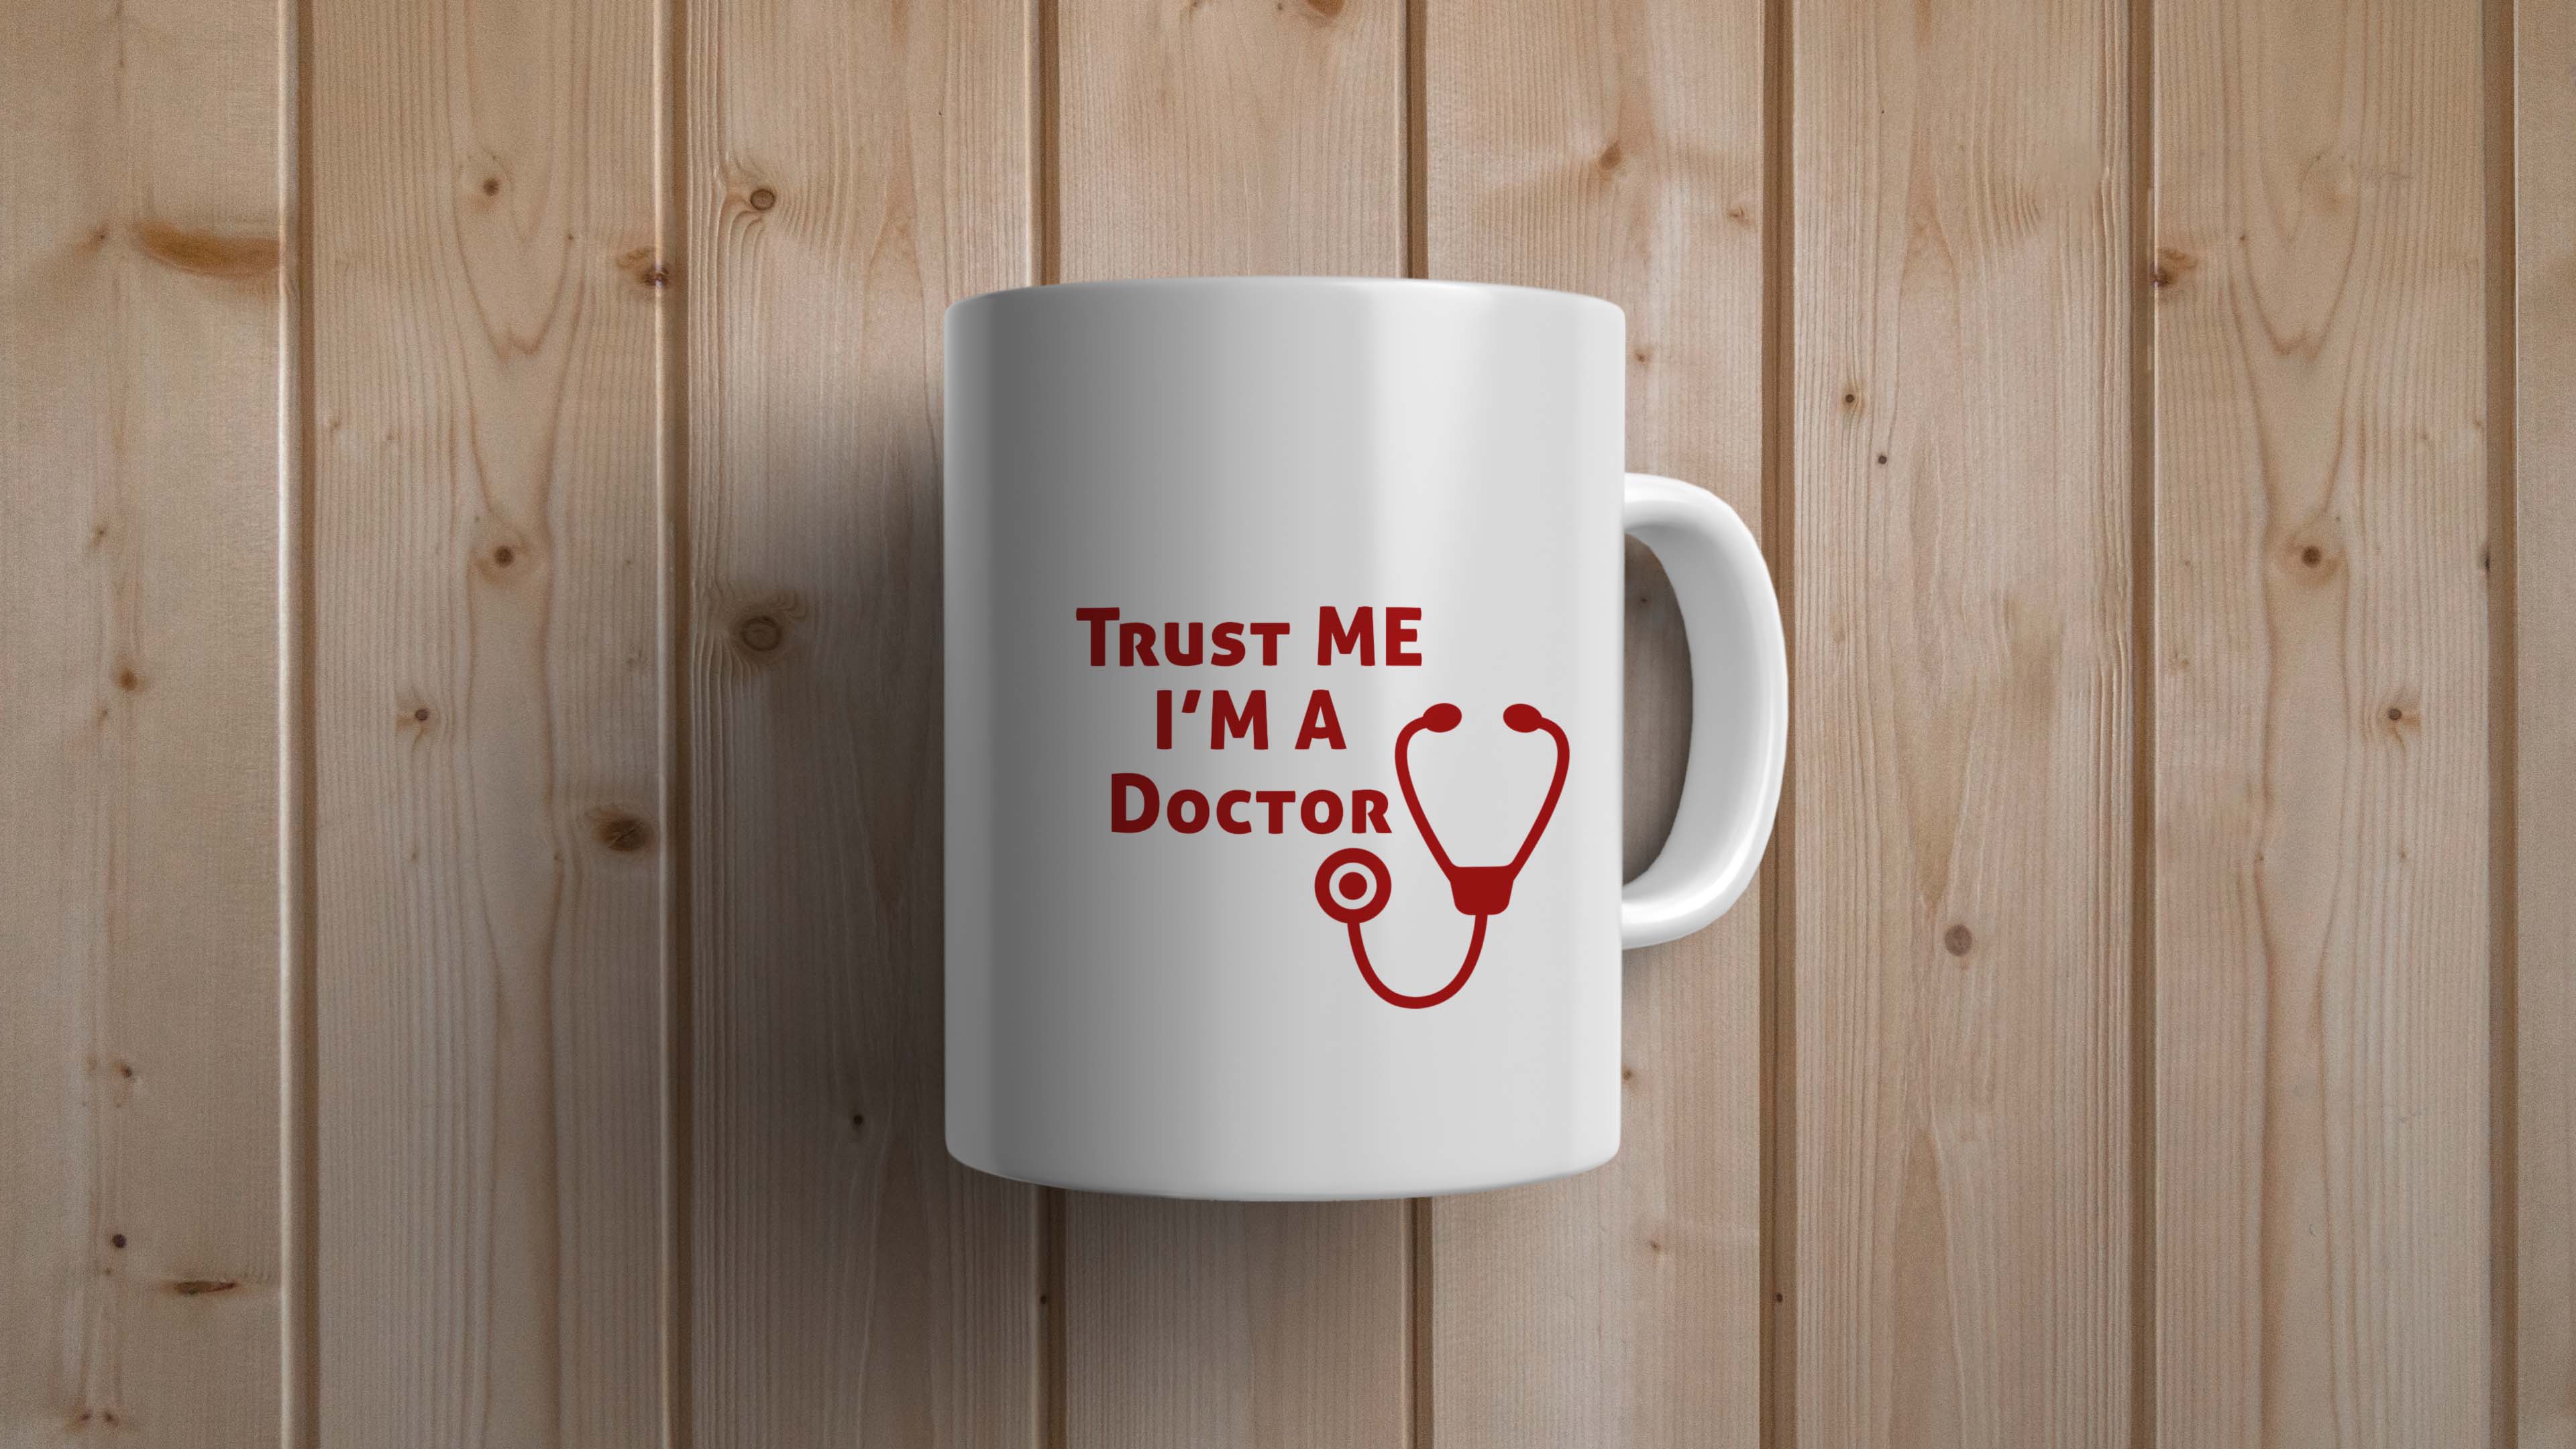 Trust me I am a Doctor Statement Mug